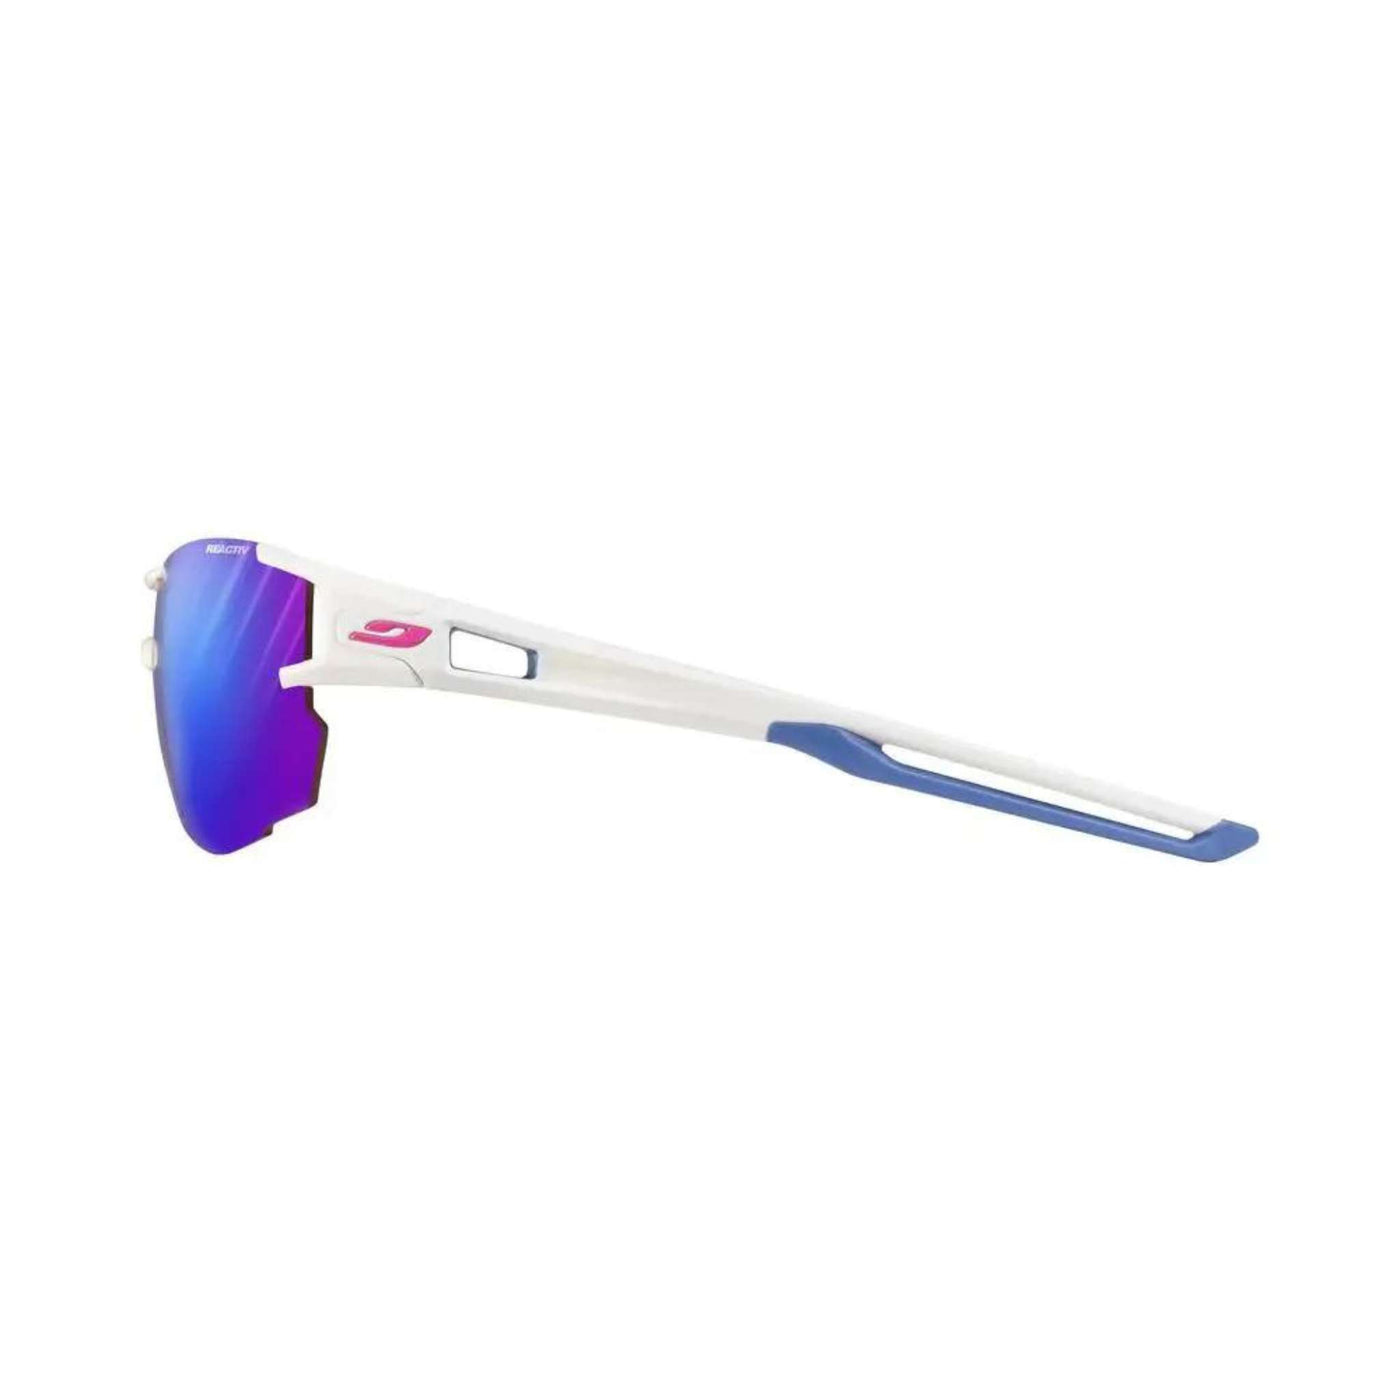 Julbo Aerolite White/Blue Sunglasses - Reactiv Lens